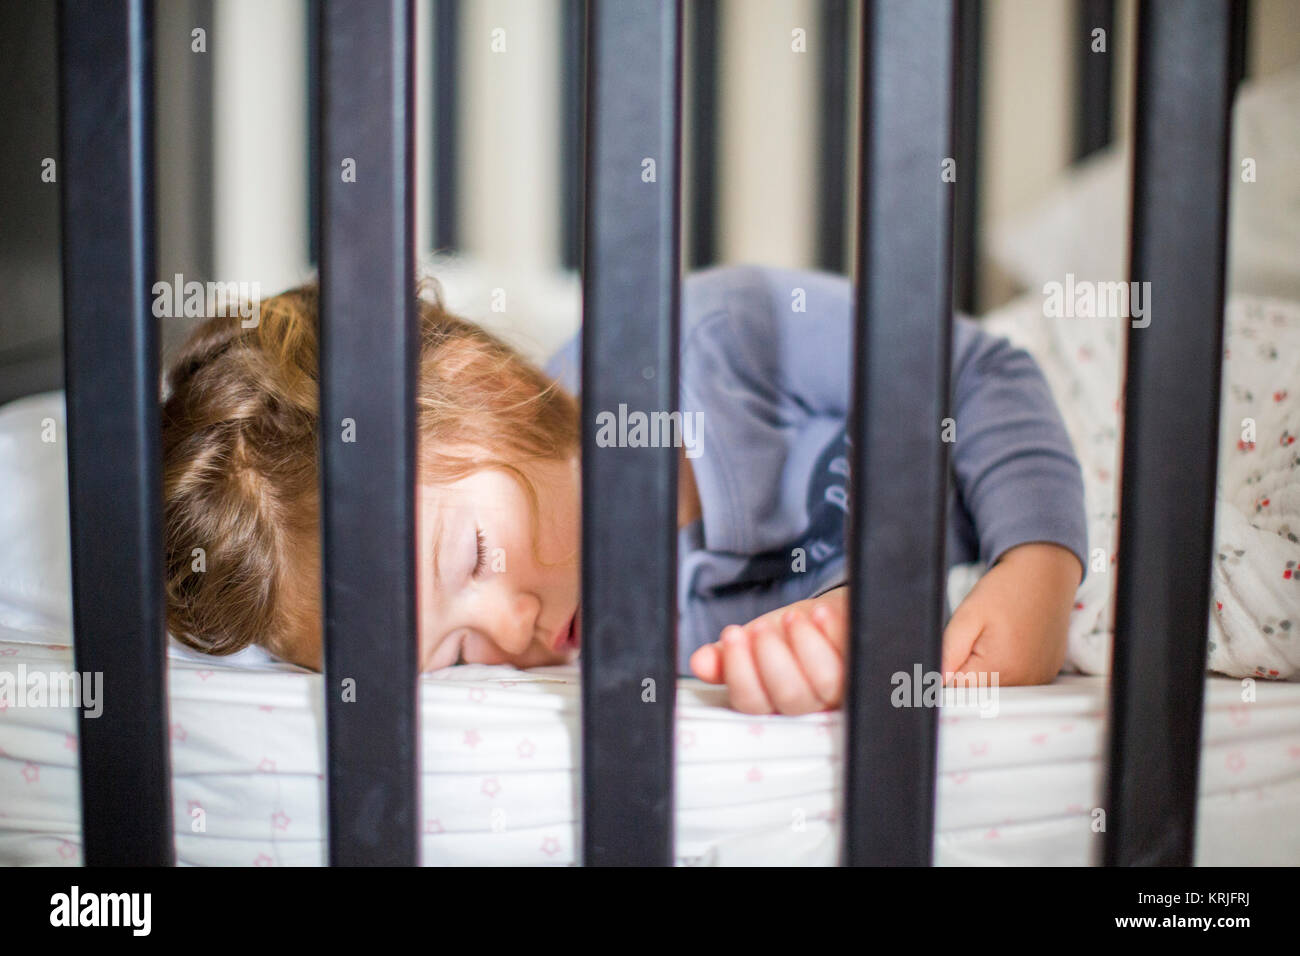 Caucasian baby girl sleeping in crib Stock Photo